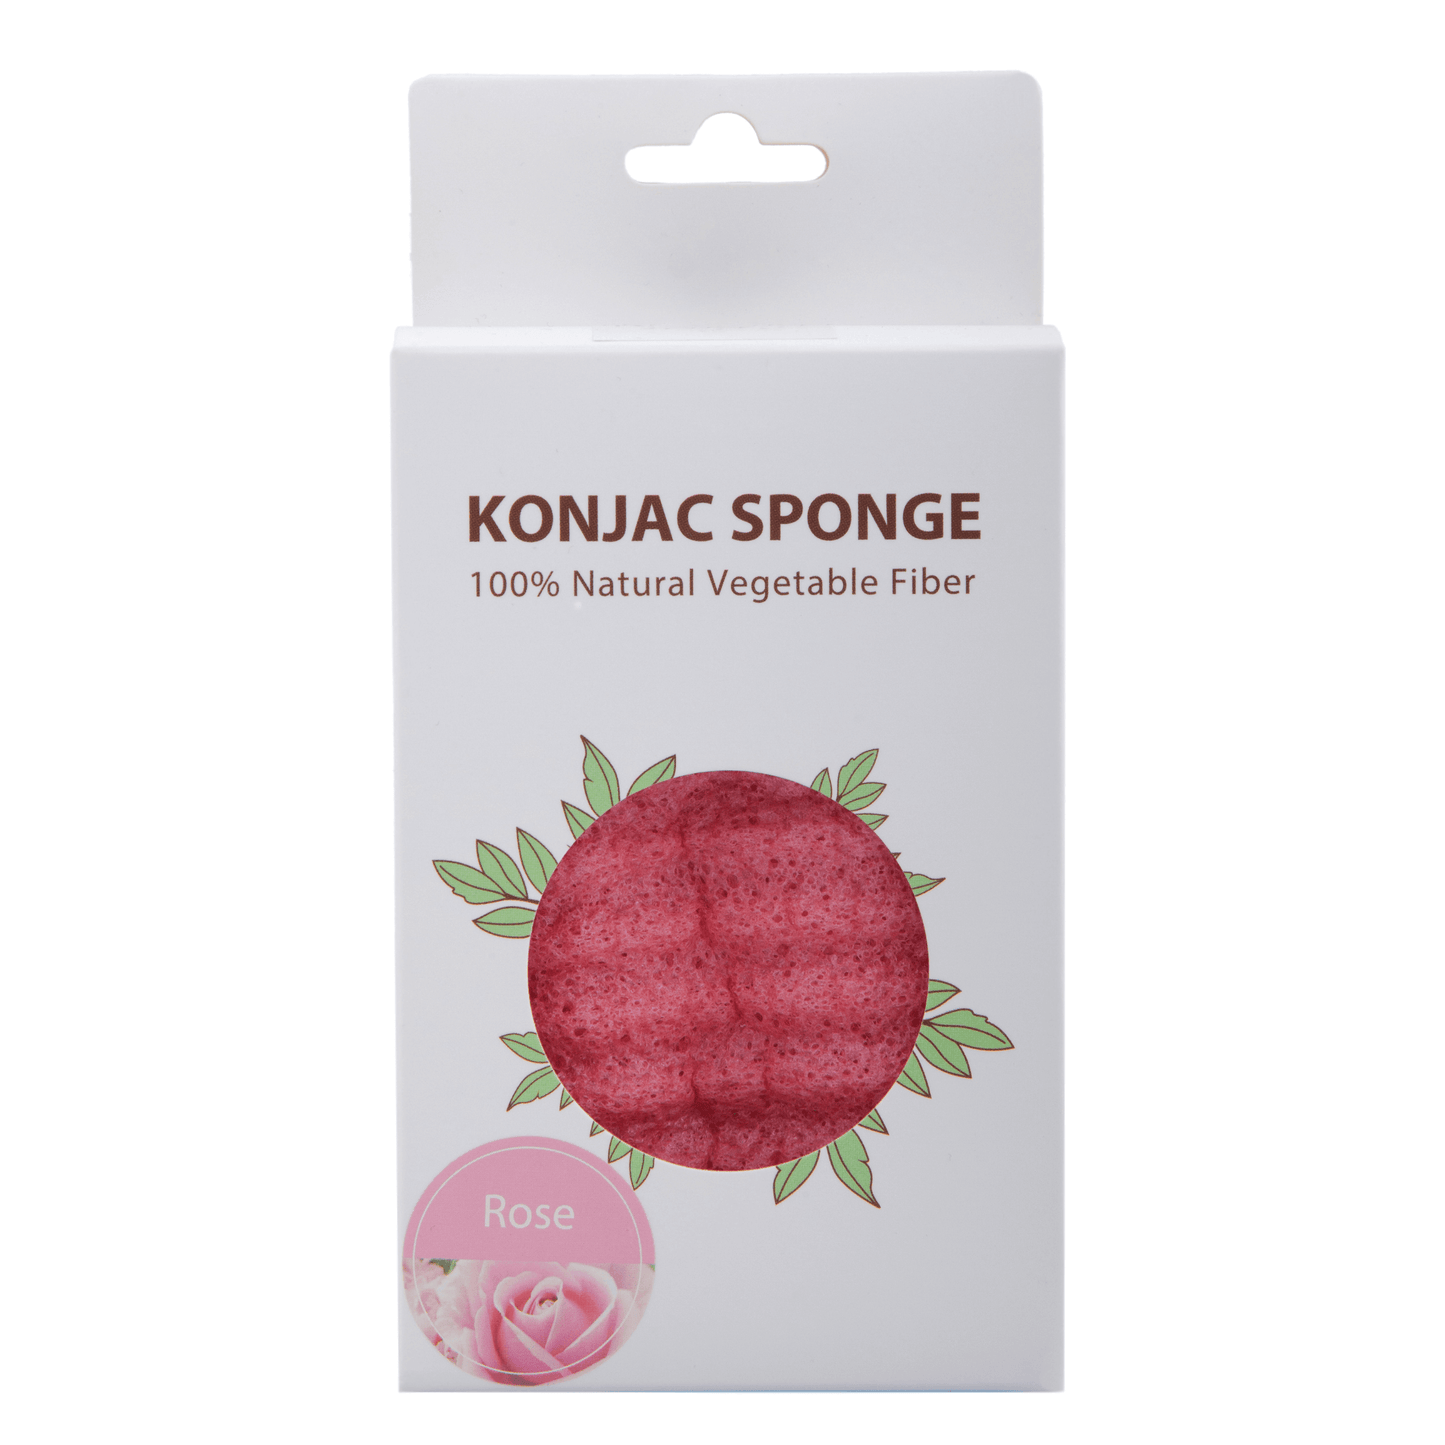 100% Natural Vegetable Fiber - Bio-degradable. Eco friendly - Cruelty free. The best Konjac Sponge.